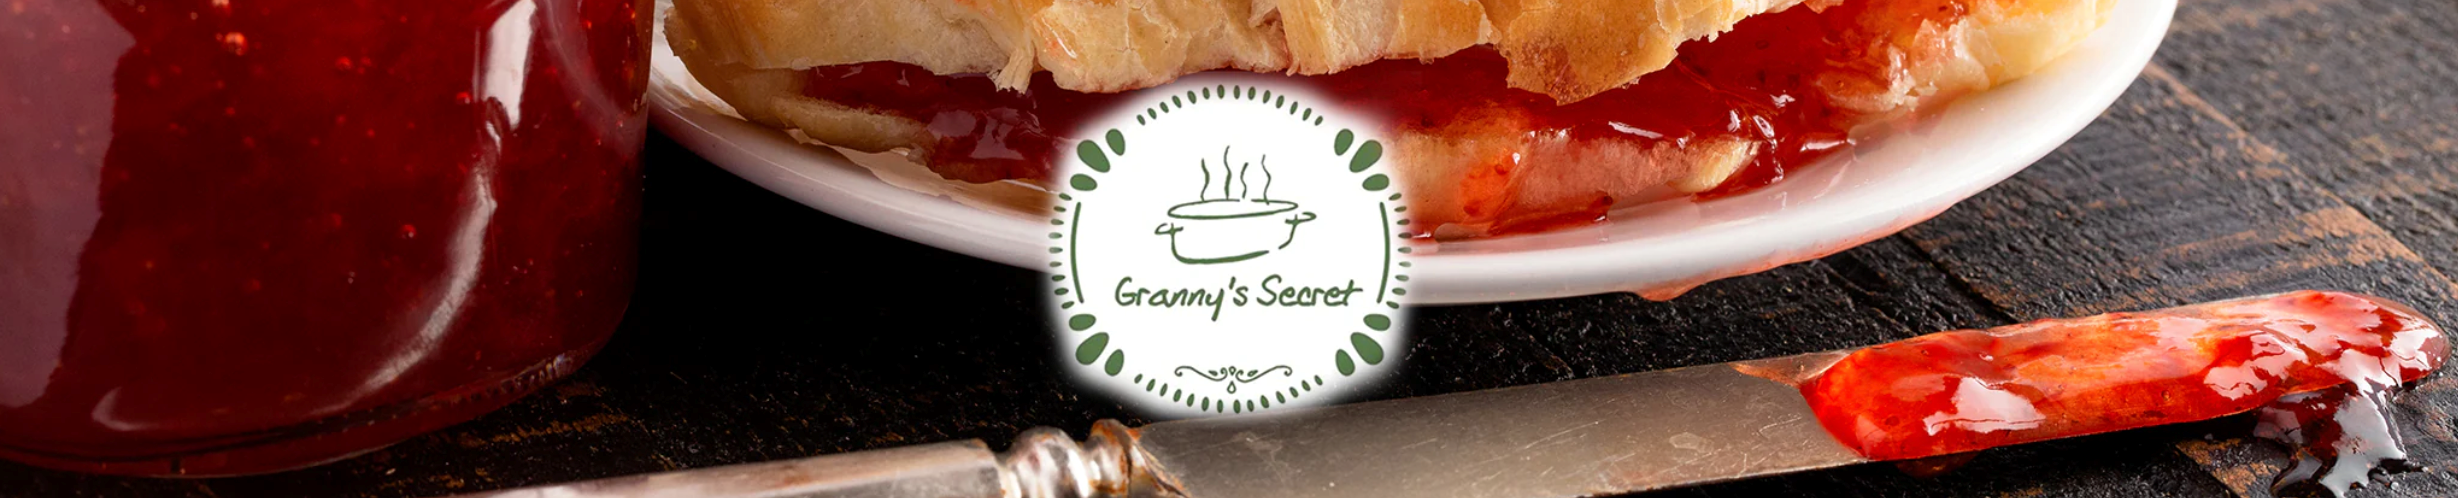 Granny's Secret - Global Imports & Exports Wholesale European Food Distributors